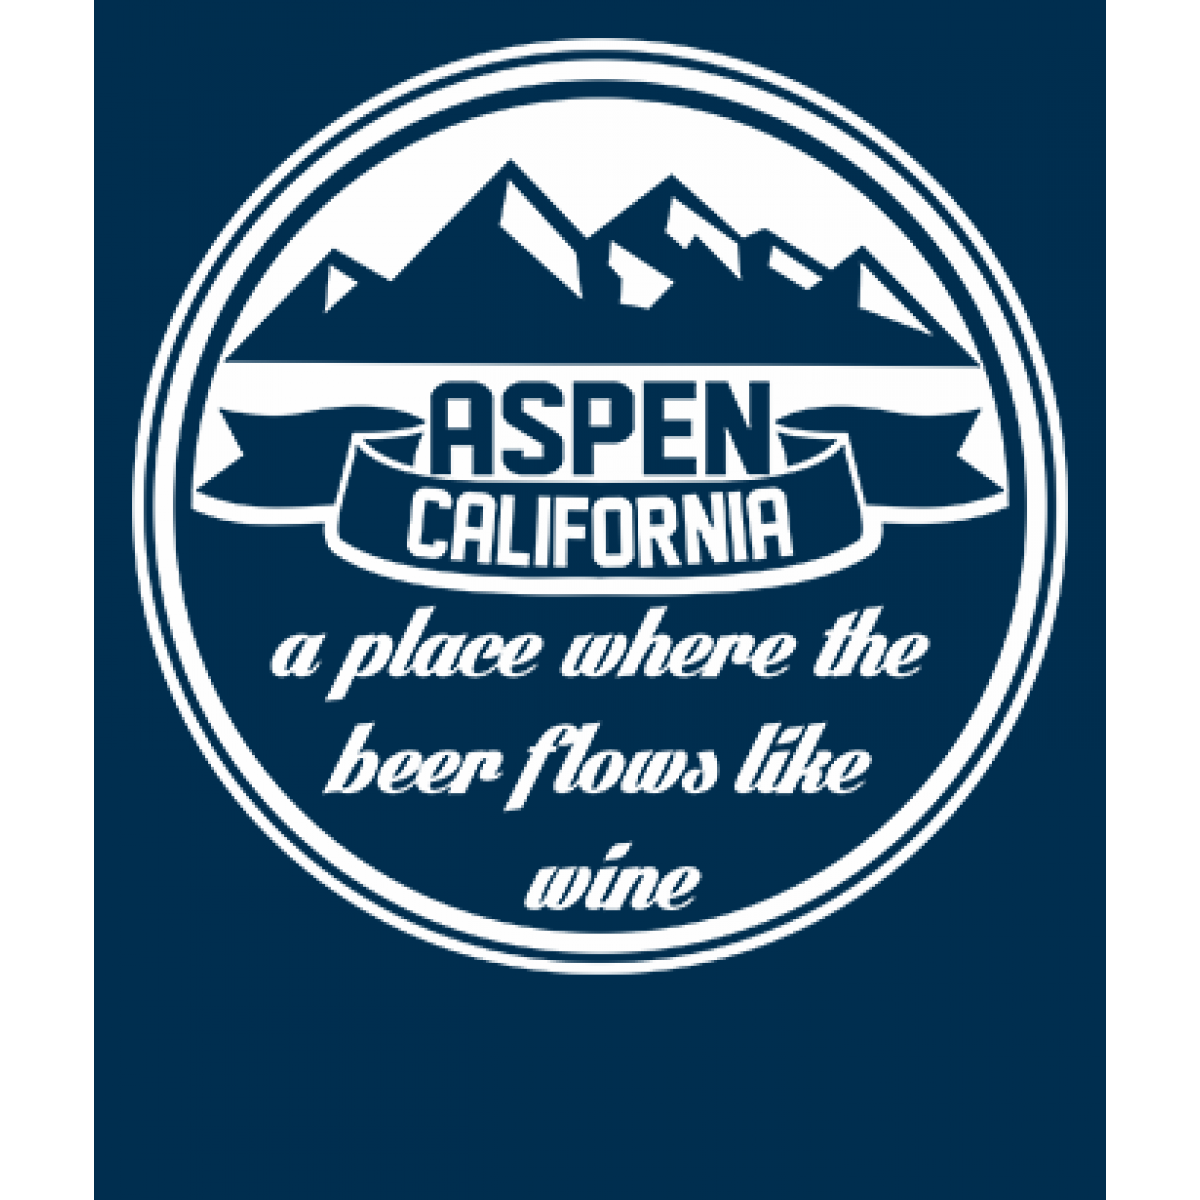 aspen-california-1200x1200